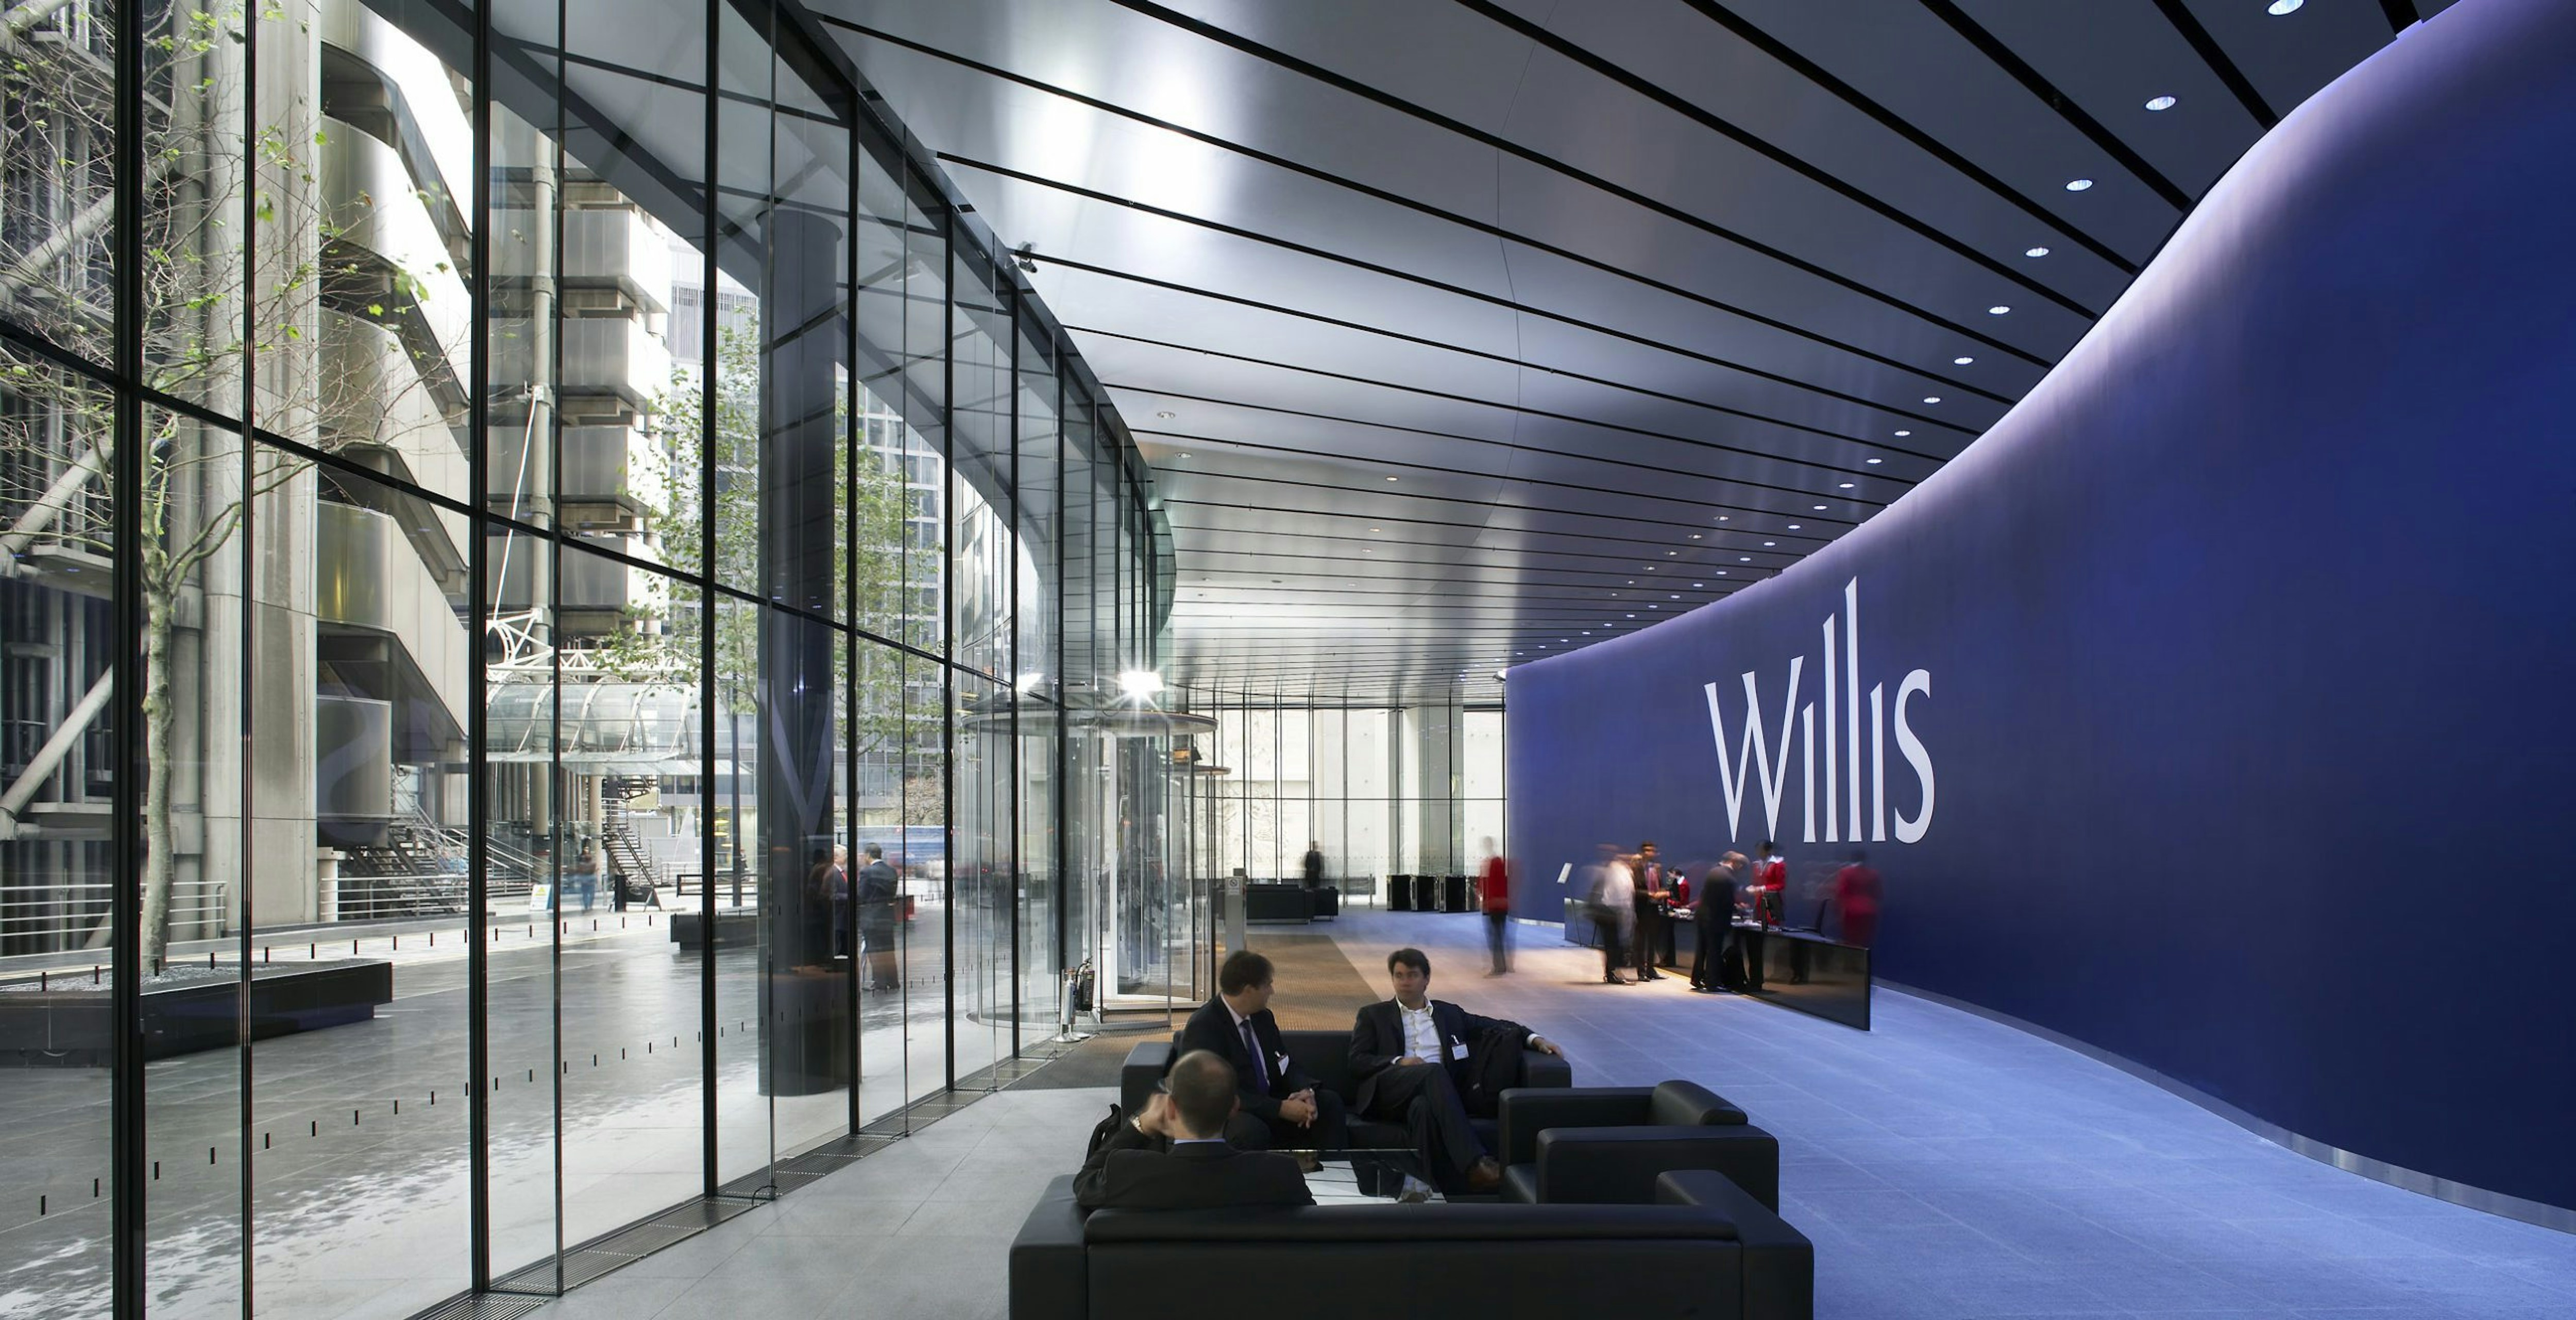 Willis Reception Area